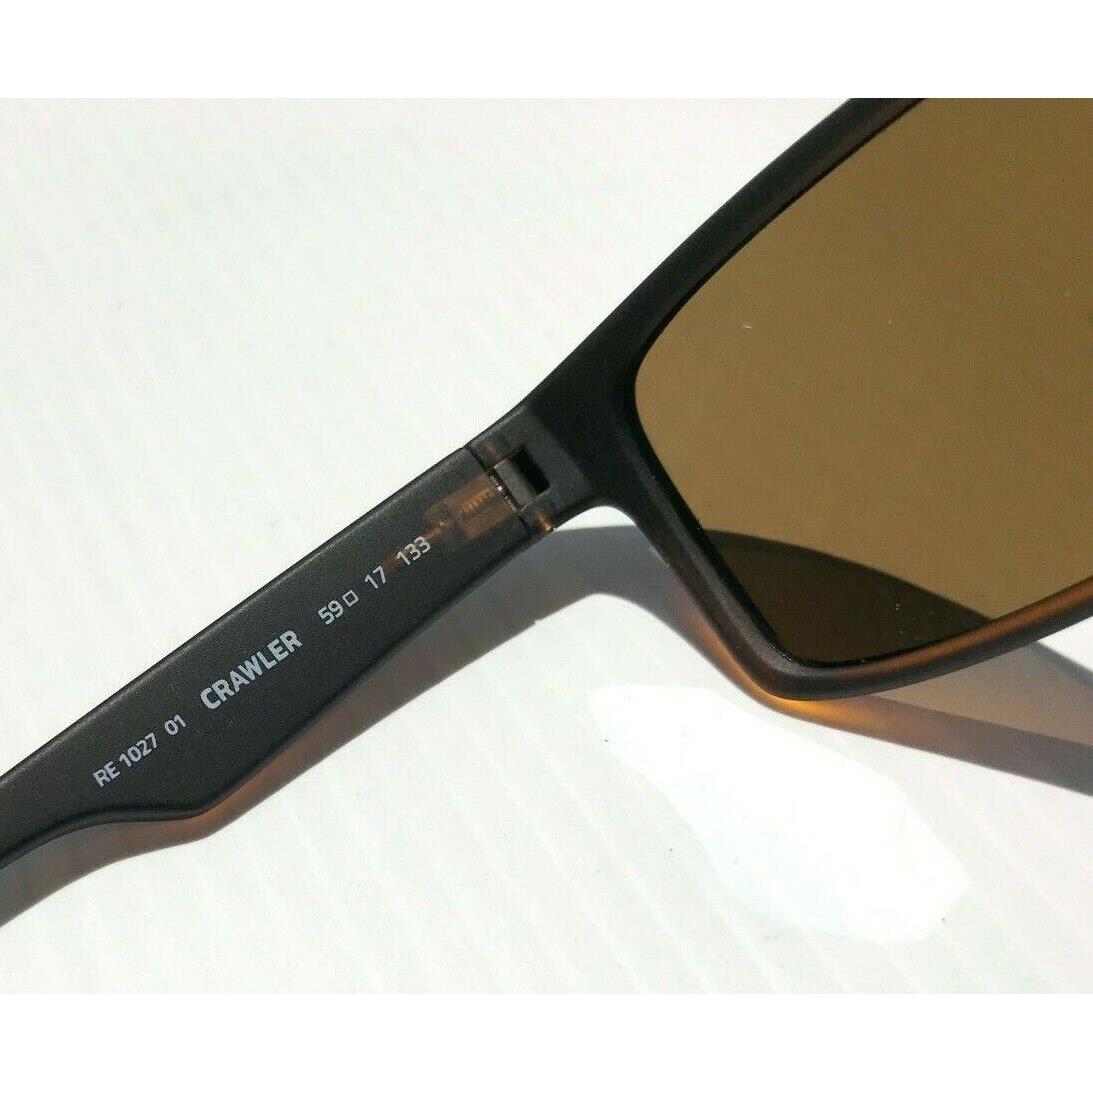 Revo sunglasses Crawler - Brown Frame, Brown Lens